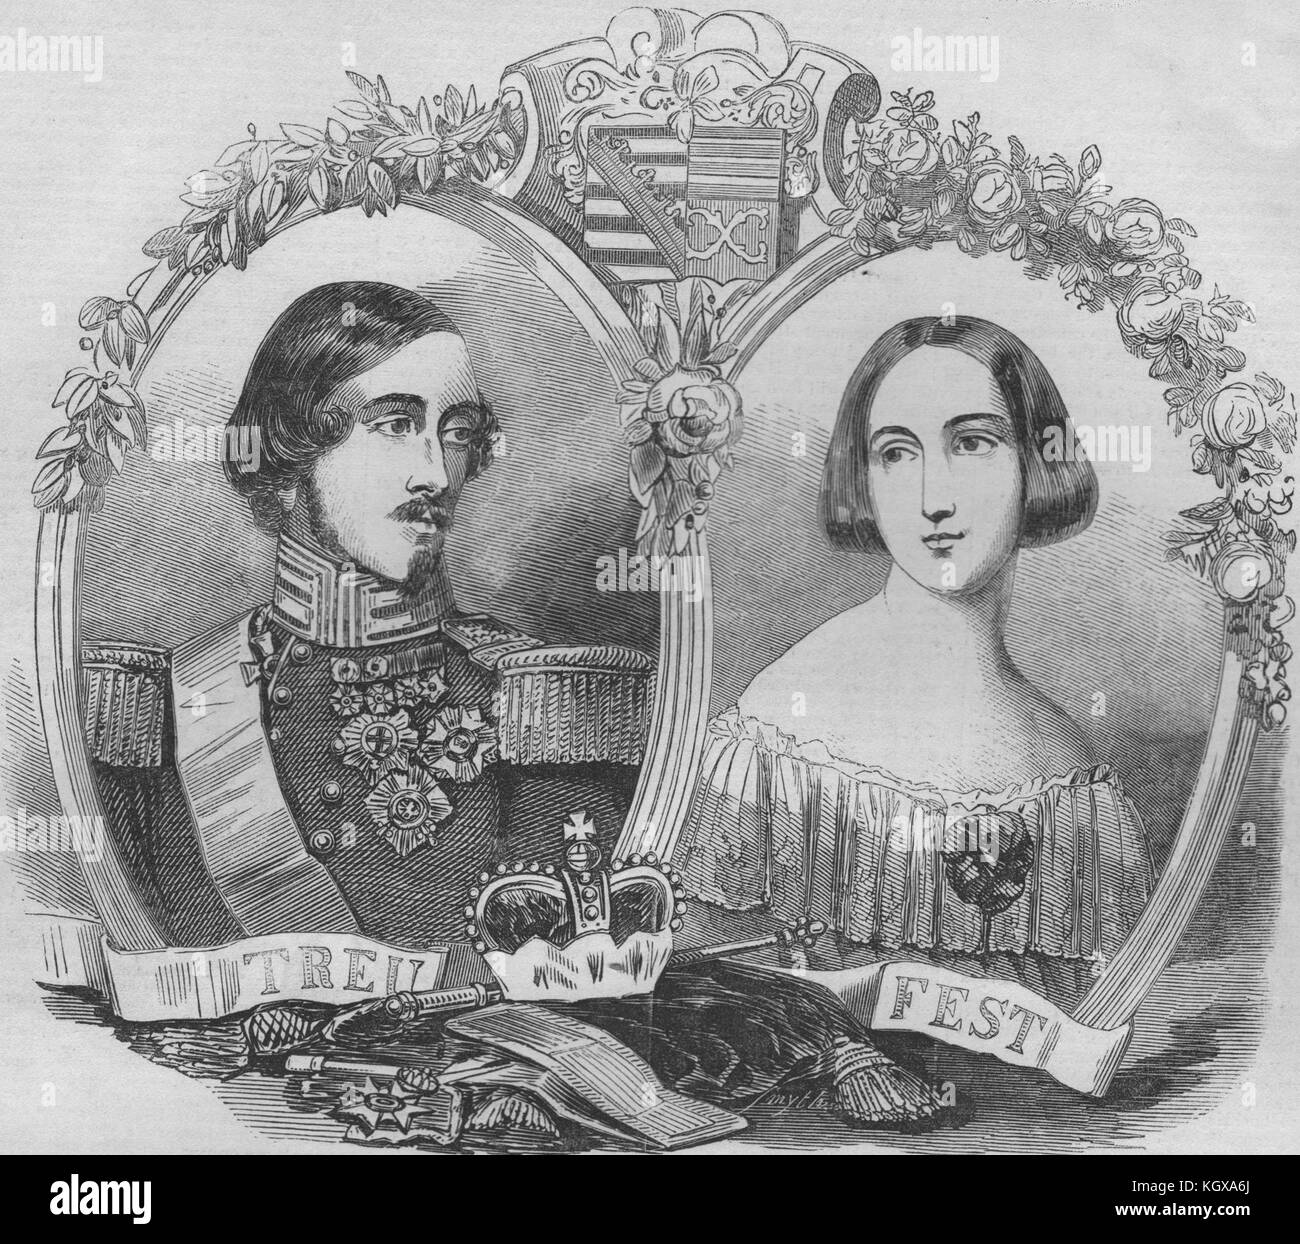 The reigning Duke & Duchess of Saxe-Coburg-Gotha. Thuringia 1845. The Illustrated London News Stock Photo